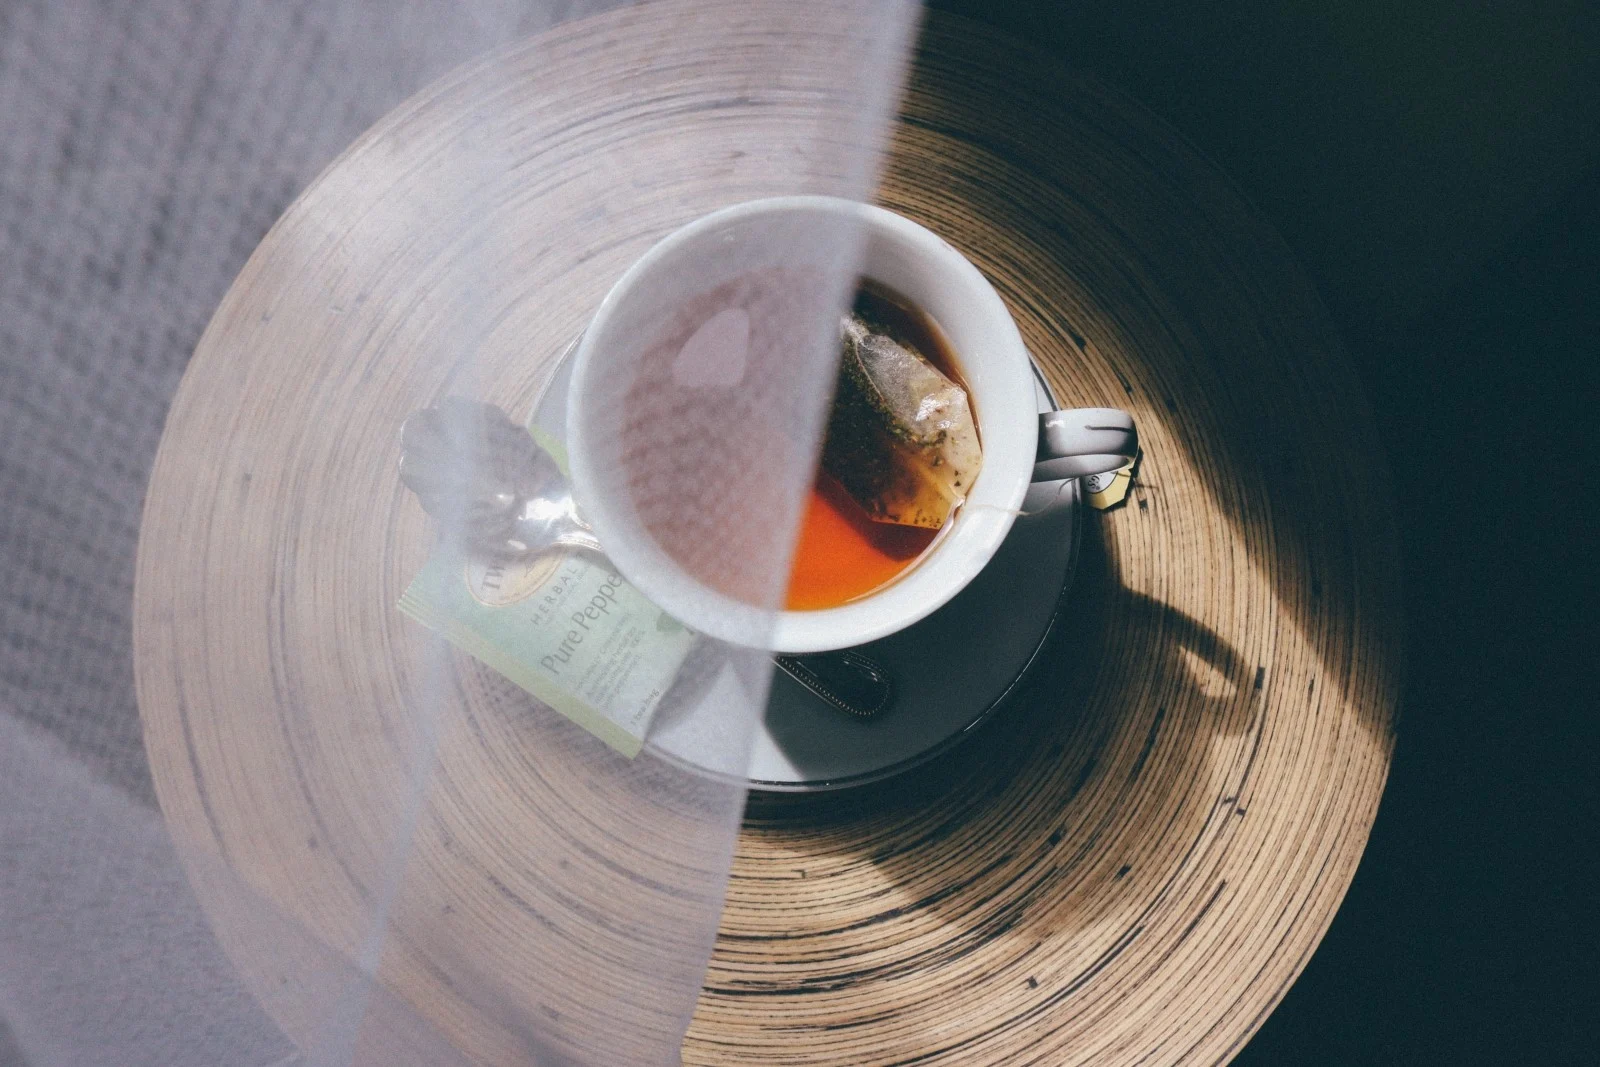 A cup of tea hidden behind tulle